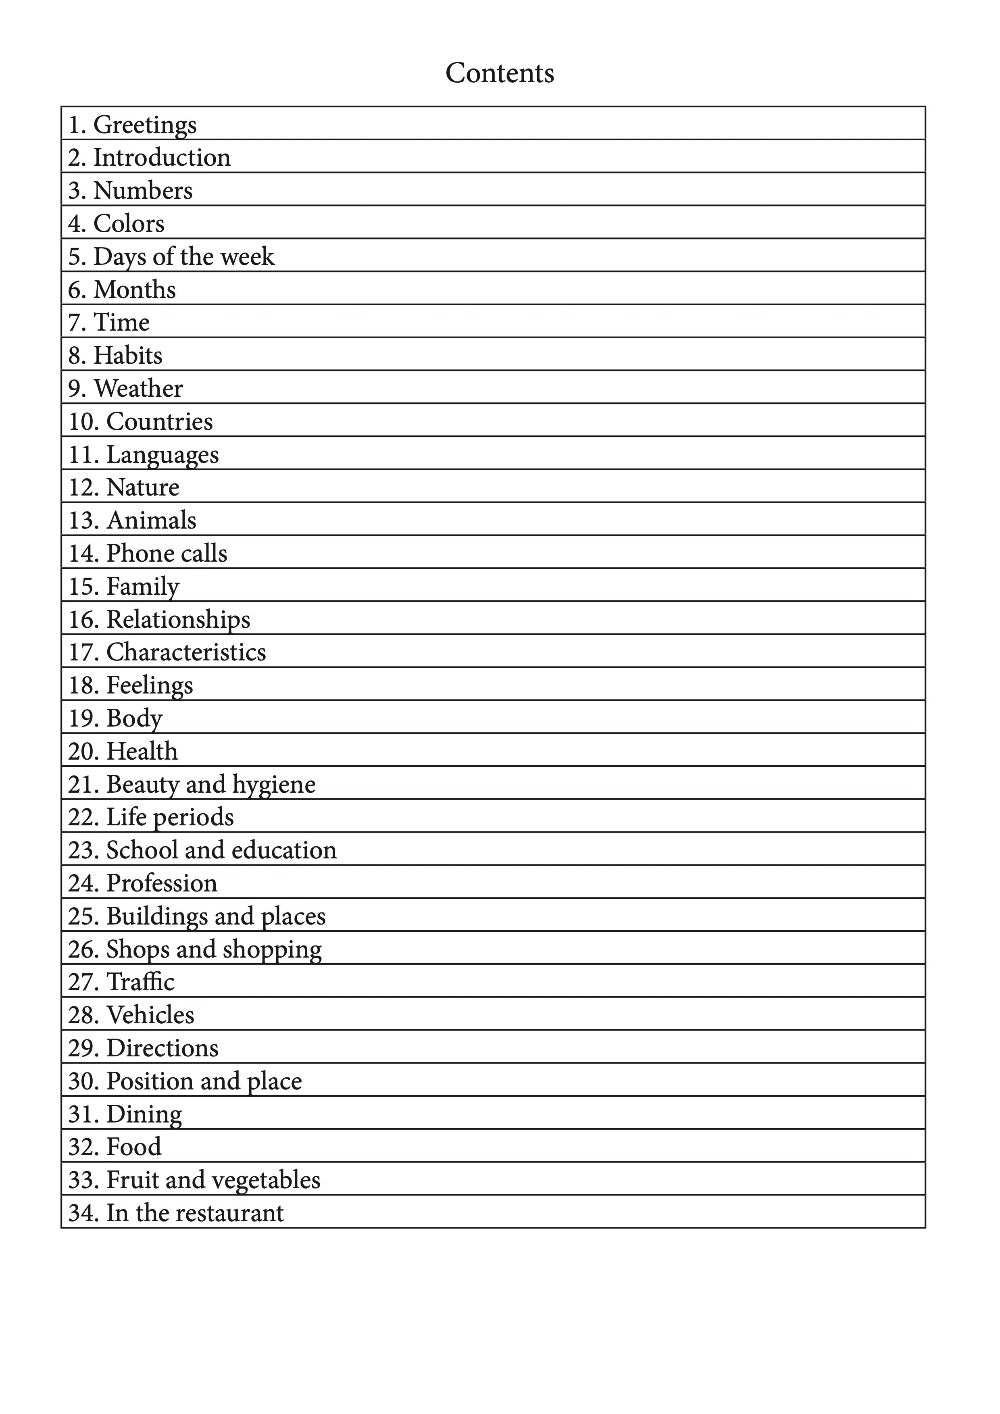 Minangkabau language learning notebook contents page 1